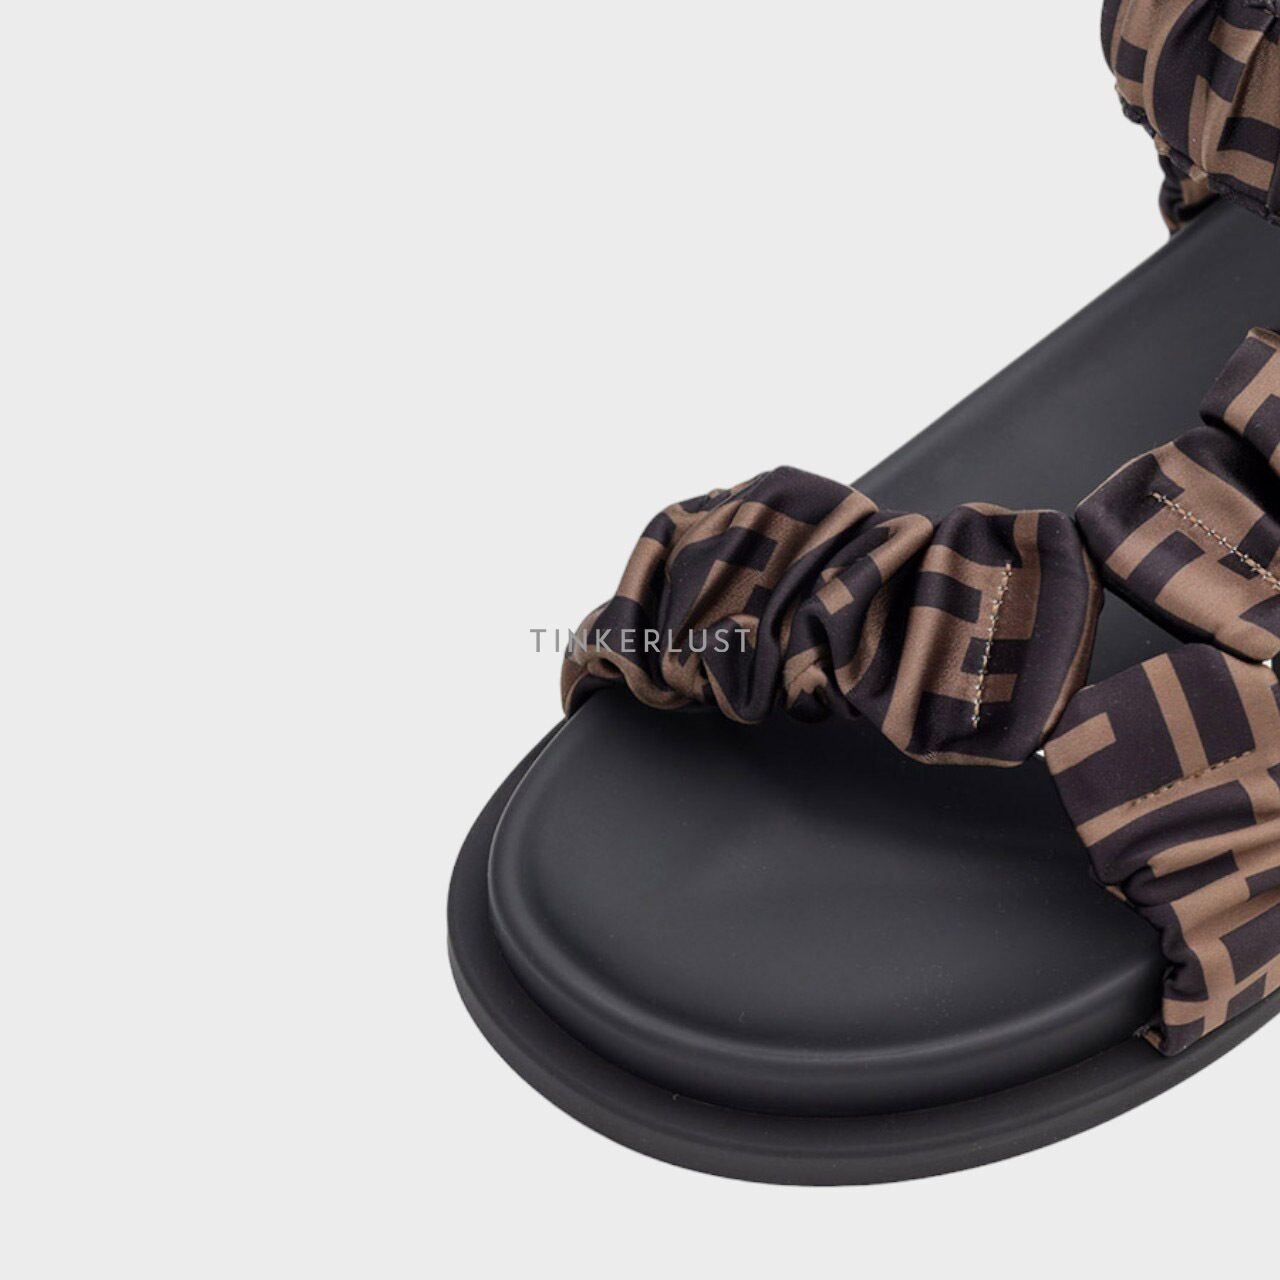 Fendi Women Feel Wide Bands Flat Sandals in Brown/Tobacco